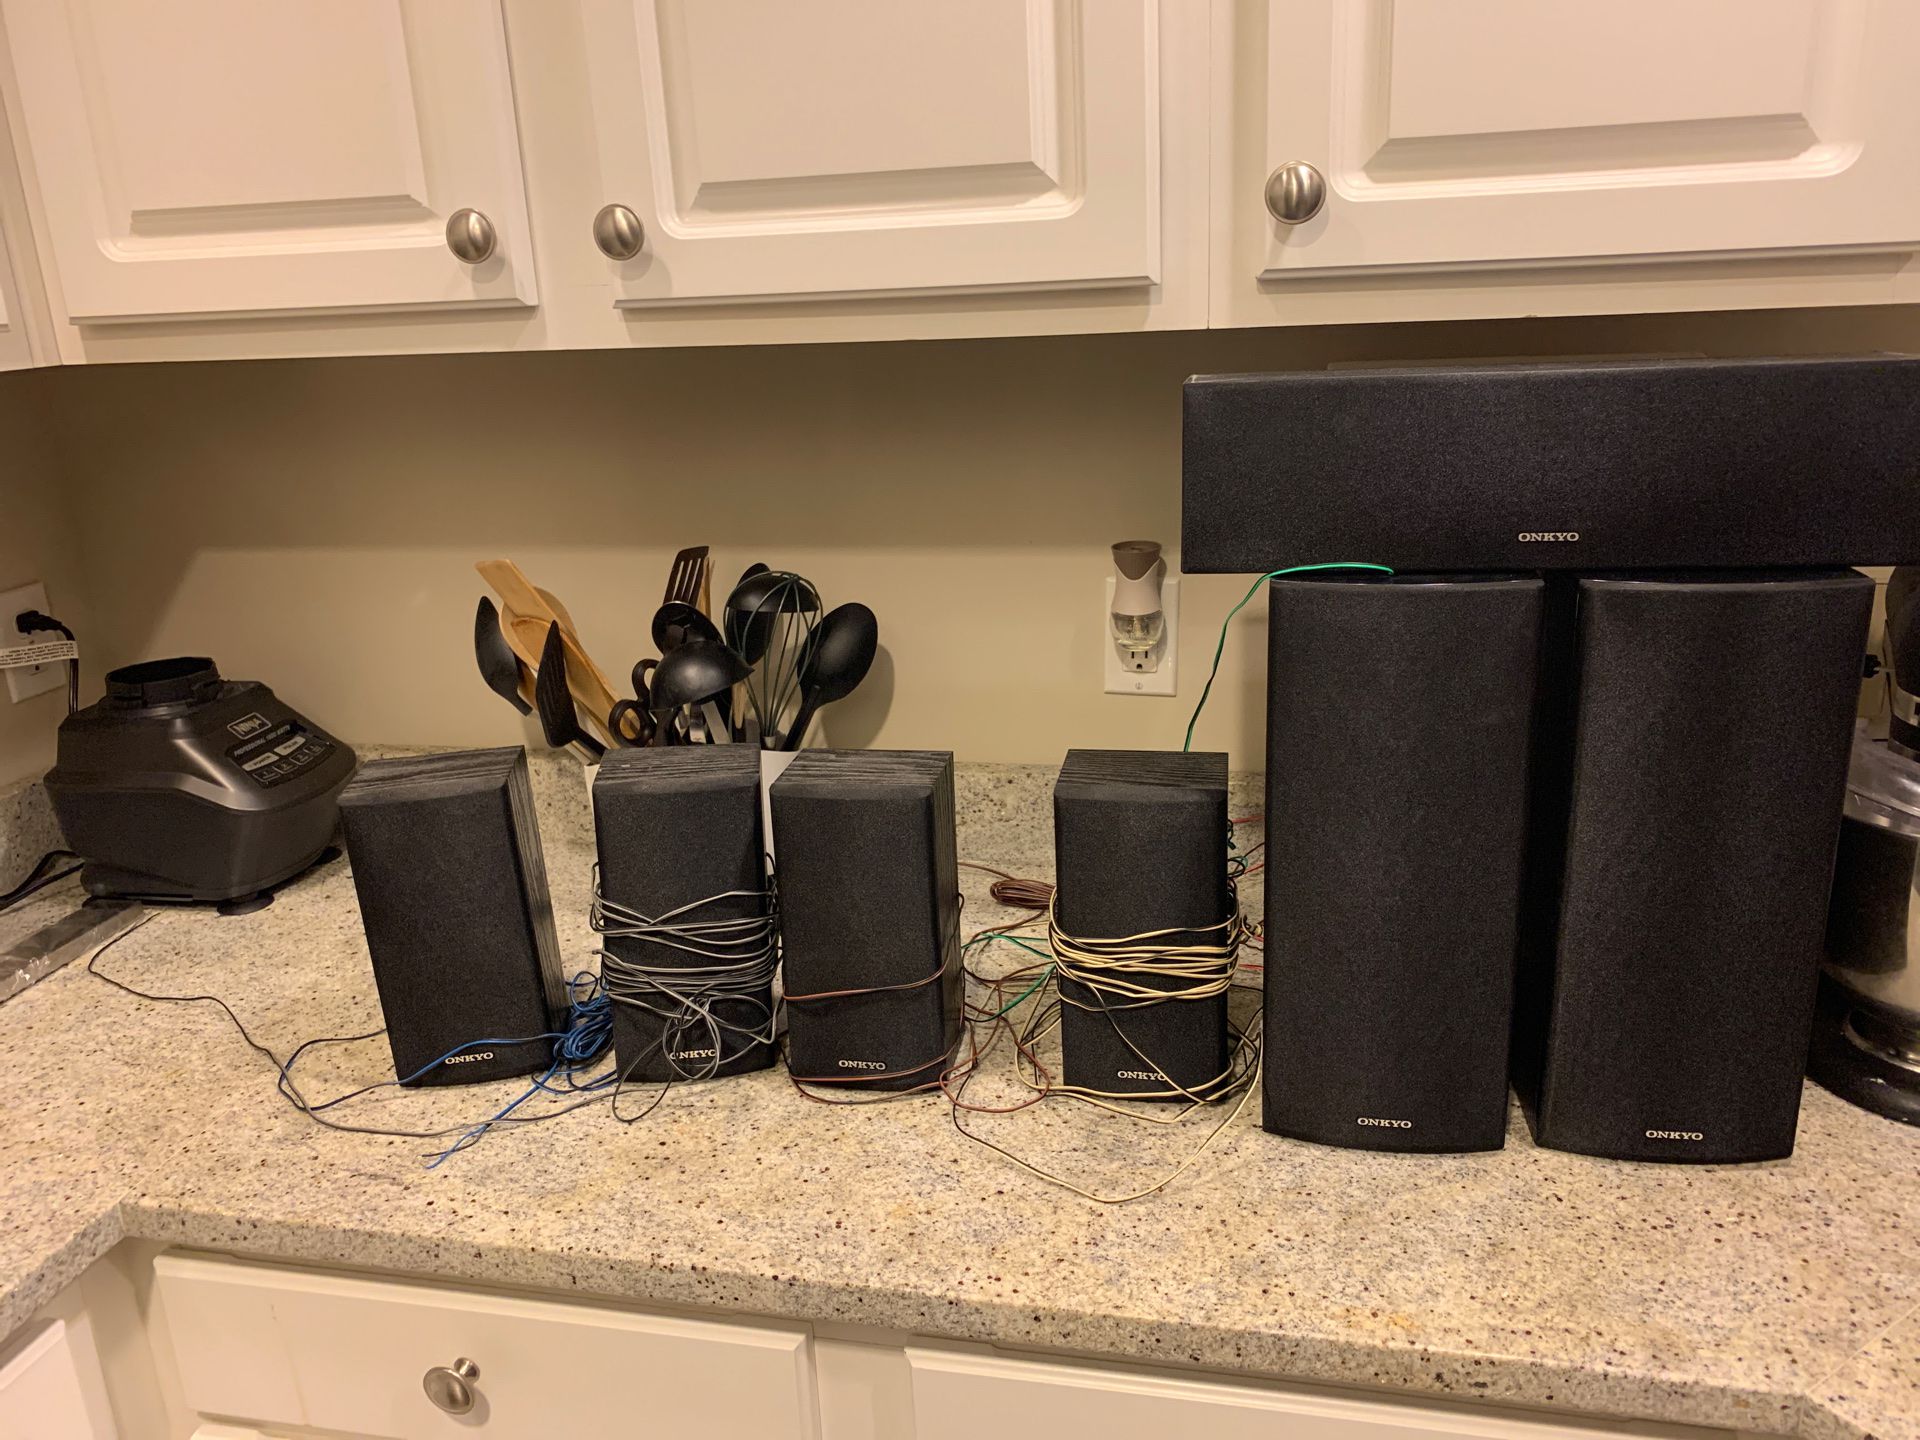 Onkyo 7.1 speakers